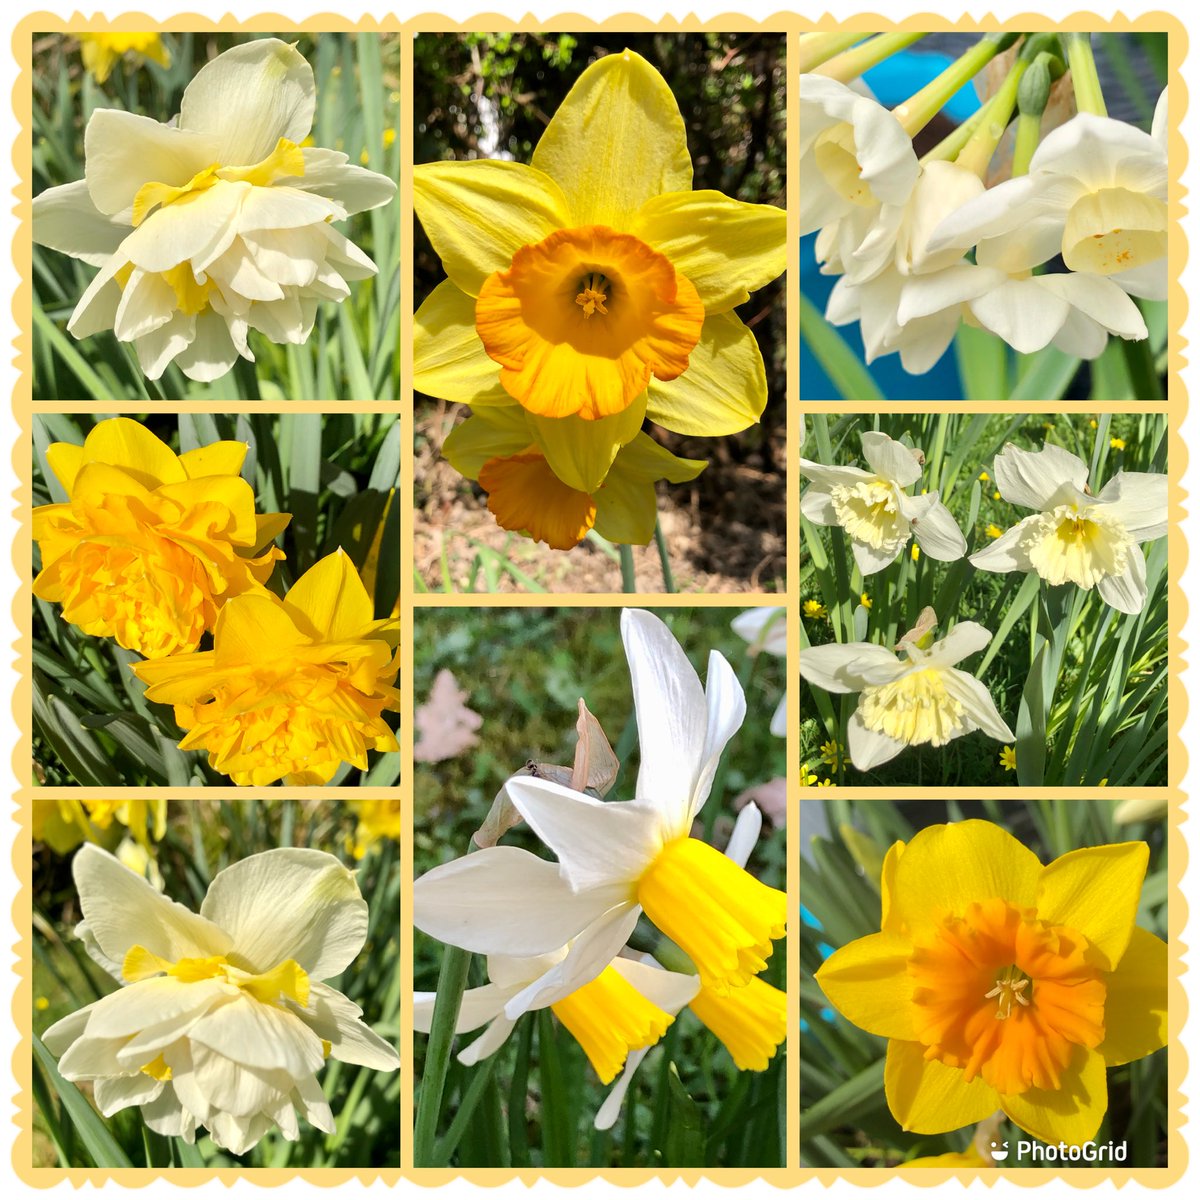 #SundayYellow #Flowers #Gardening #Sunny #WindyDay #MyGarden